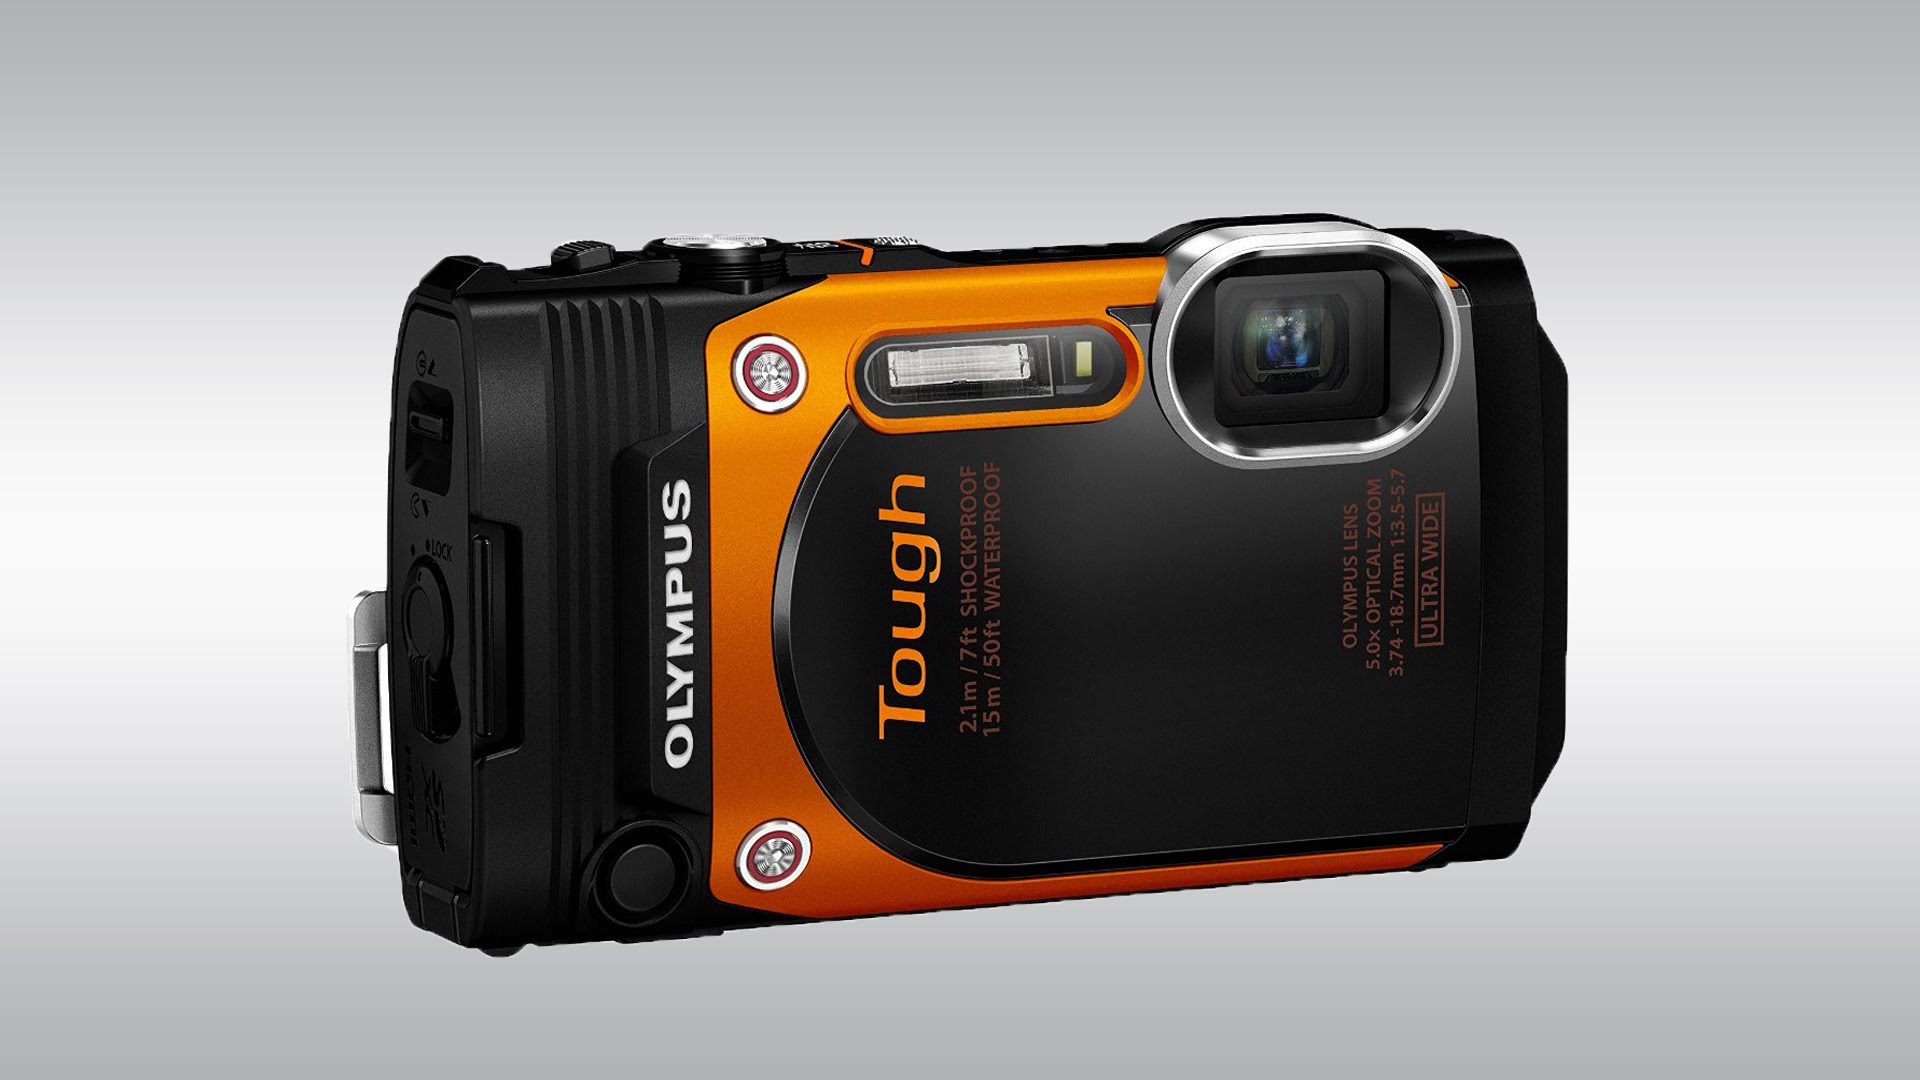 Olympus TG 860 Tough Waterproof Digital Camera with 3 Inch LCD Orange Unboxing